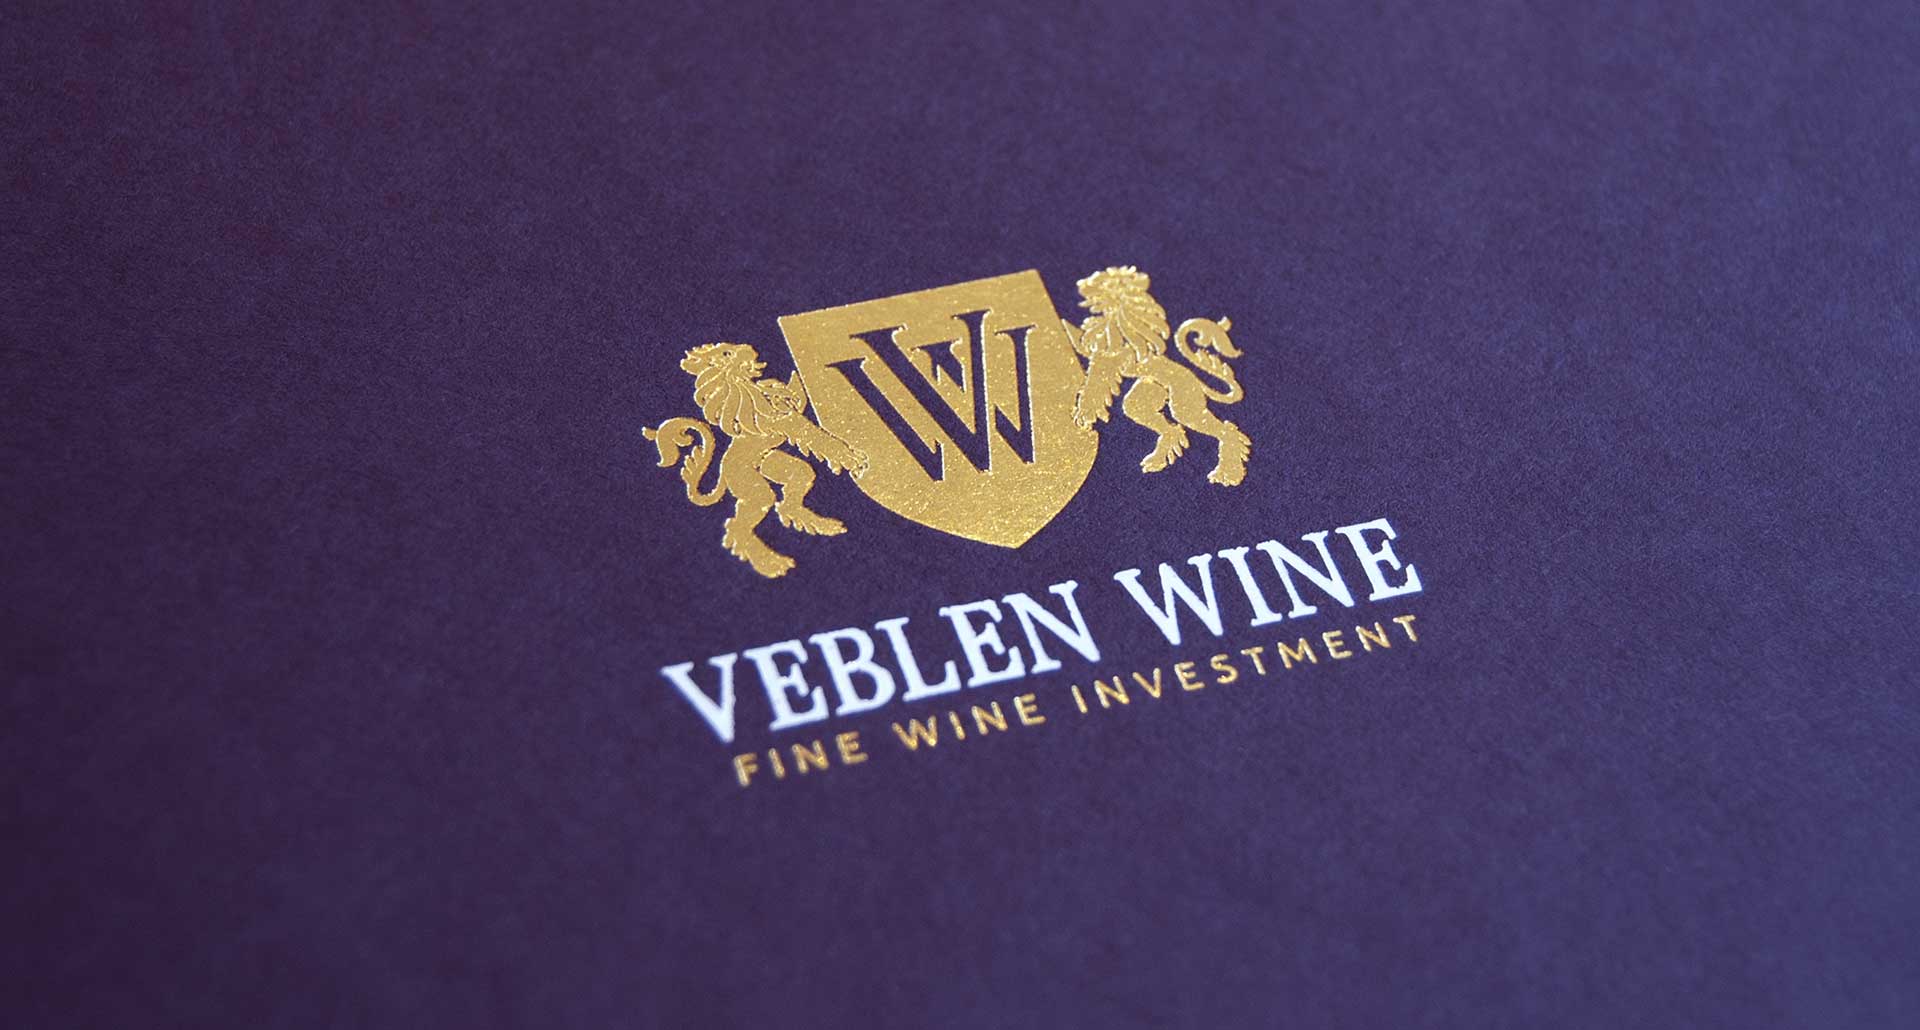 Veblen Wine logo - Brochure front cover